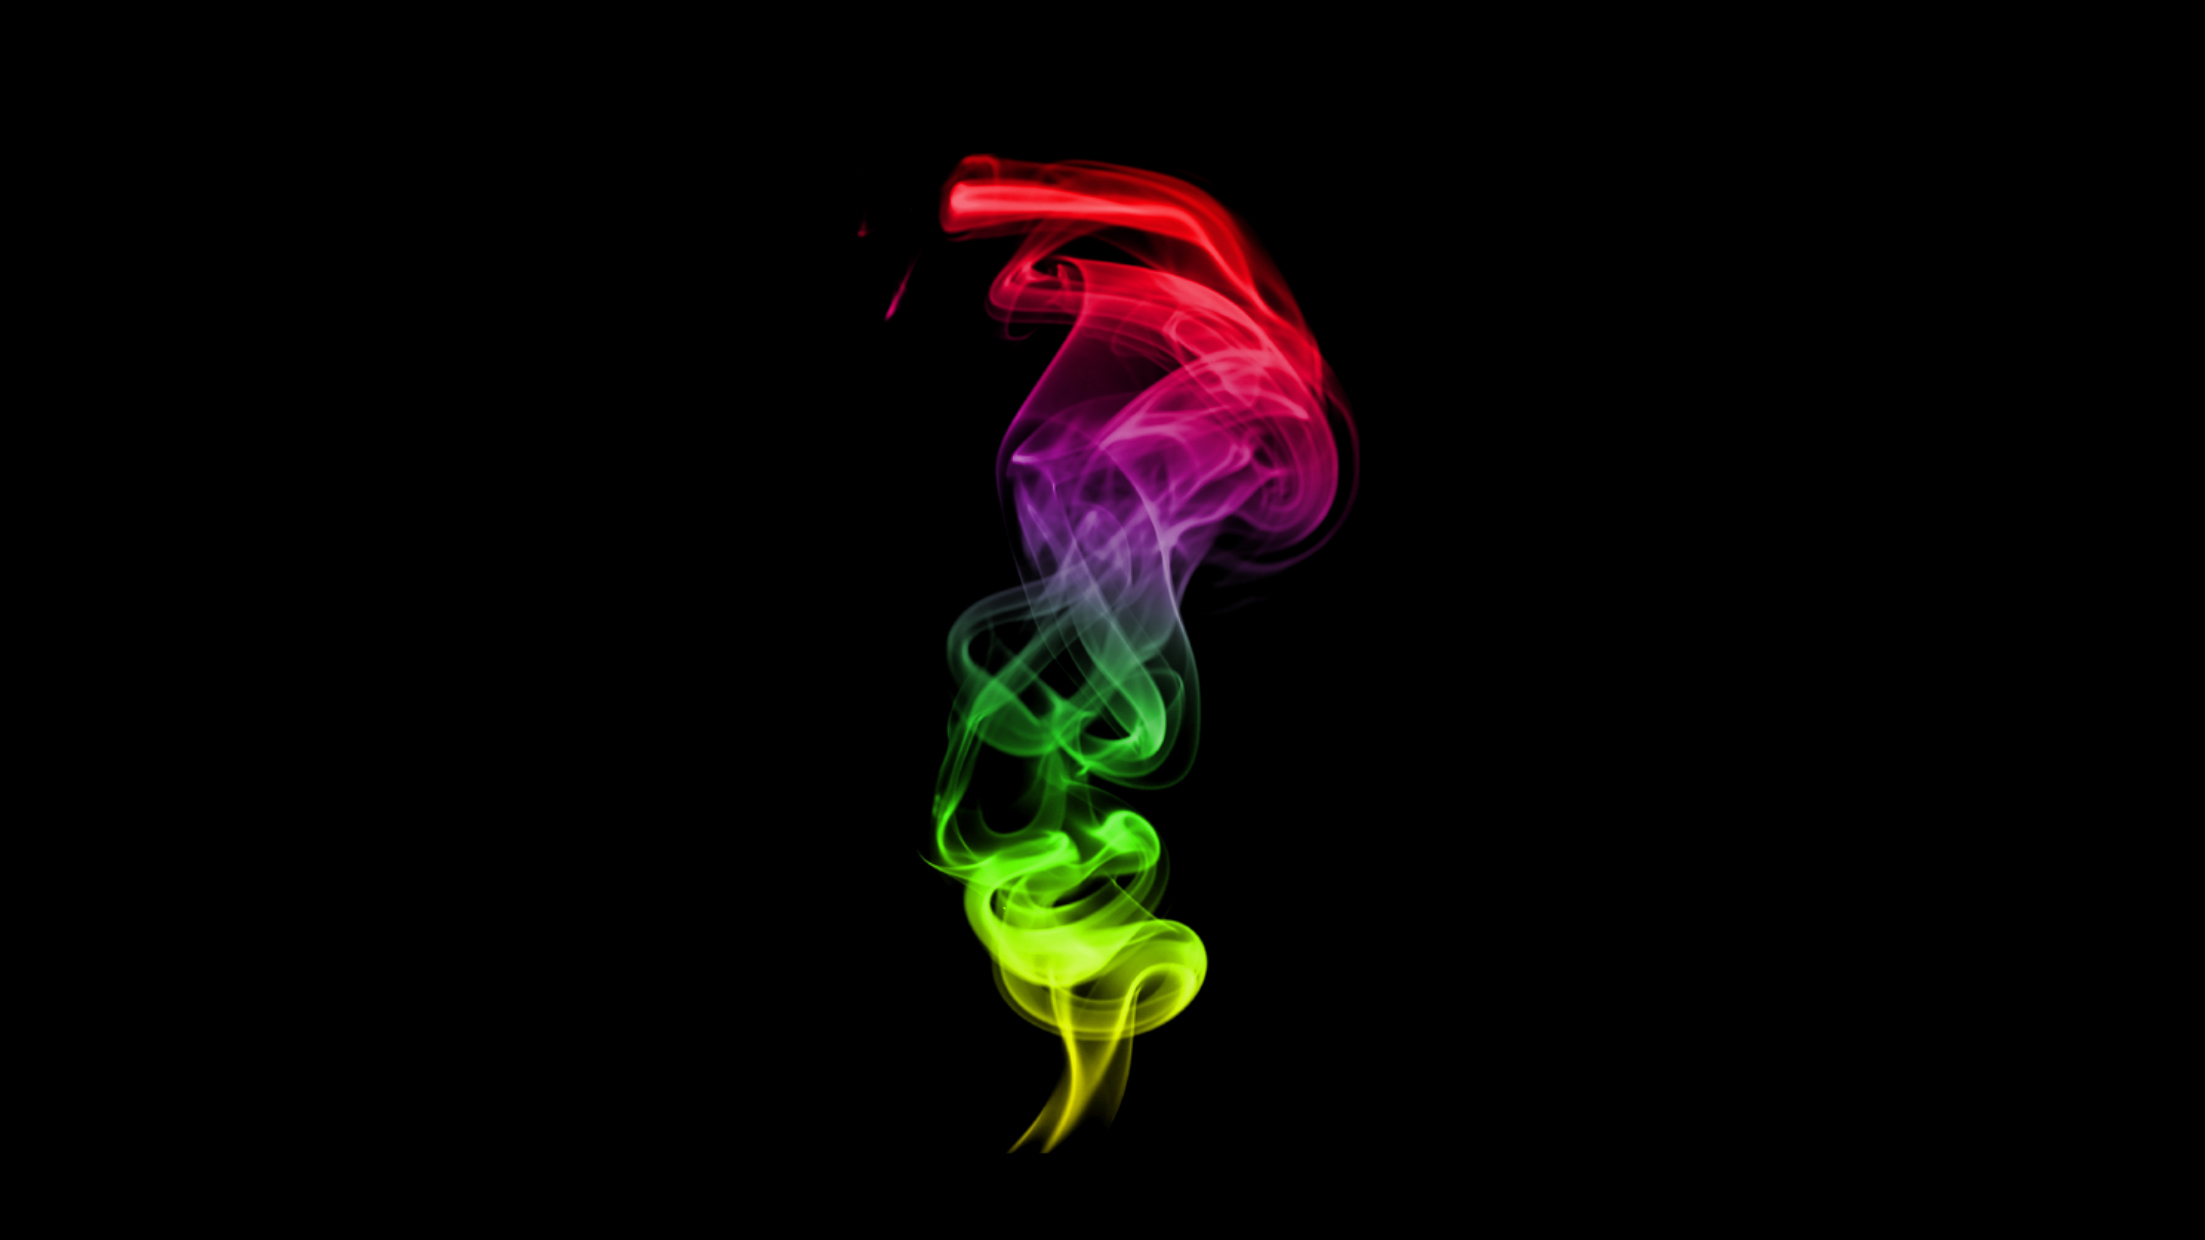 Colored Smoke By Kennywfz